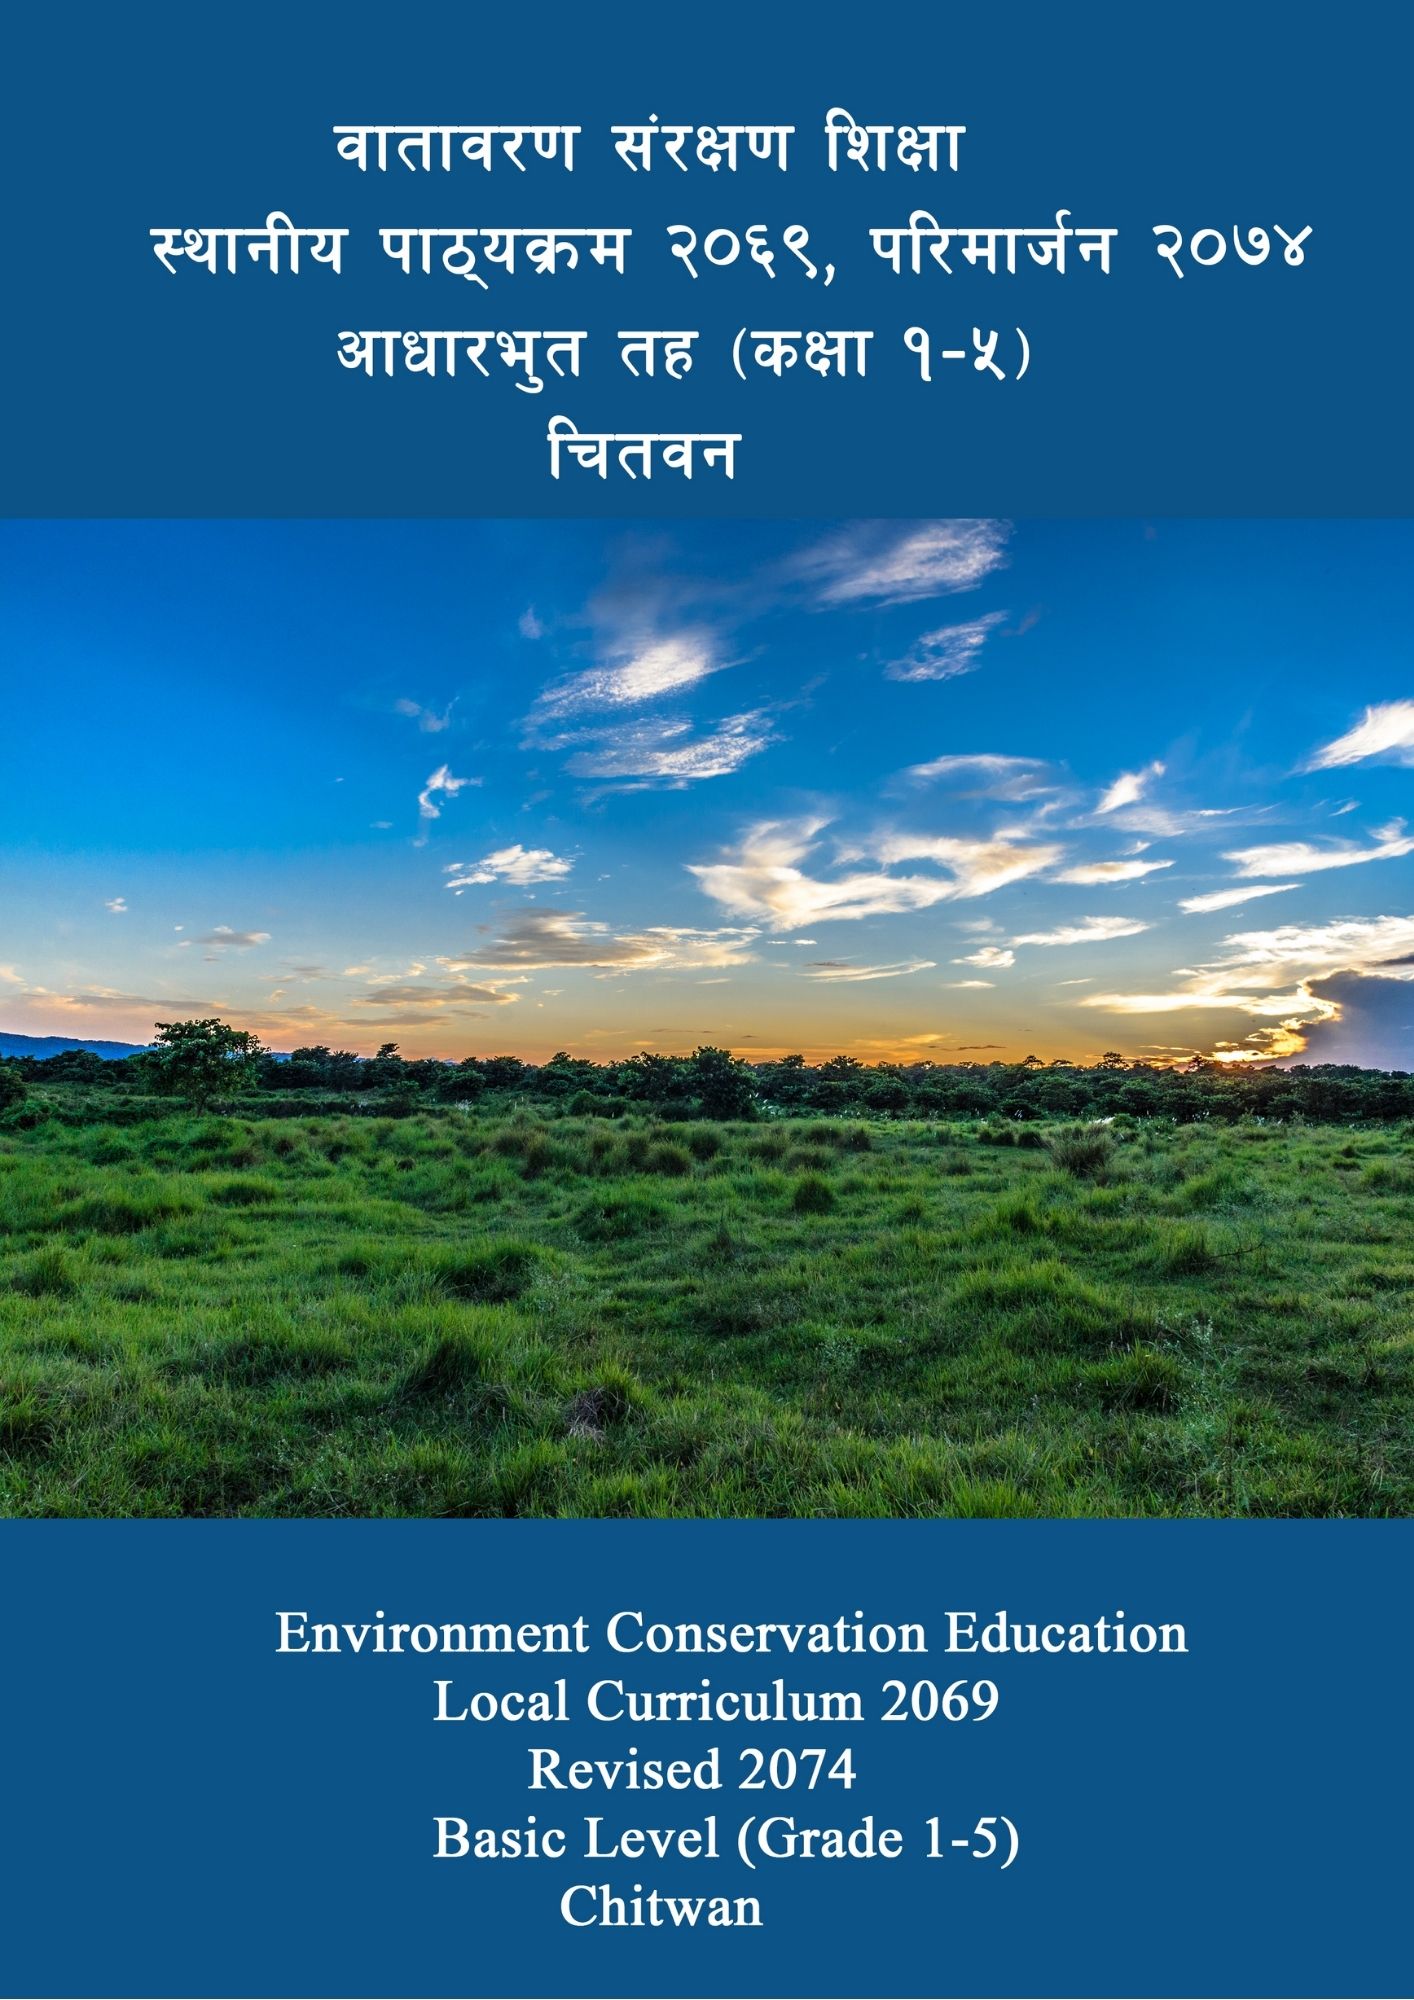 Environment Conservation Education Local Curriculum 2069 Grade 4 & 5 Chitwan